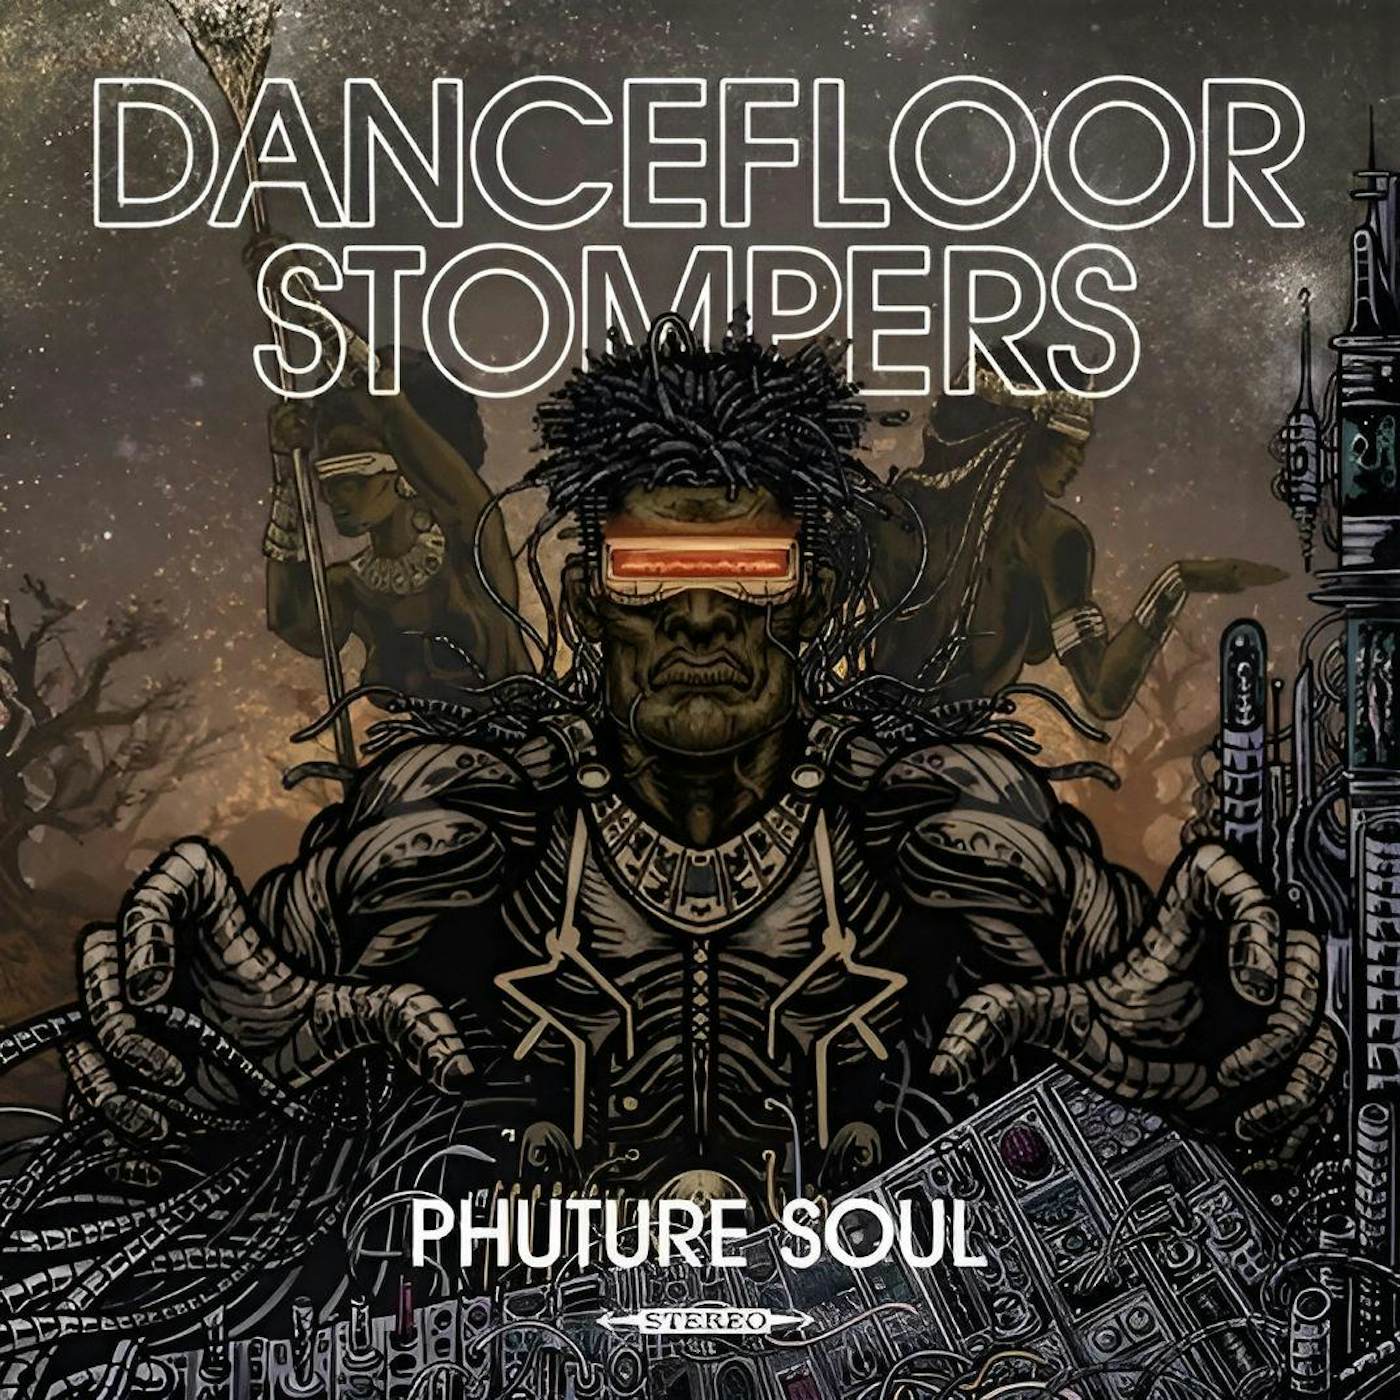 Dancefloor Stompers Phuture Soul (7" Single) Vinyl Record